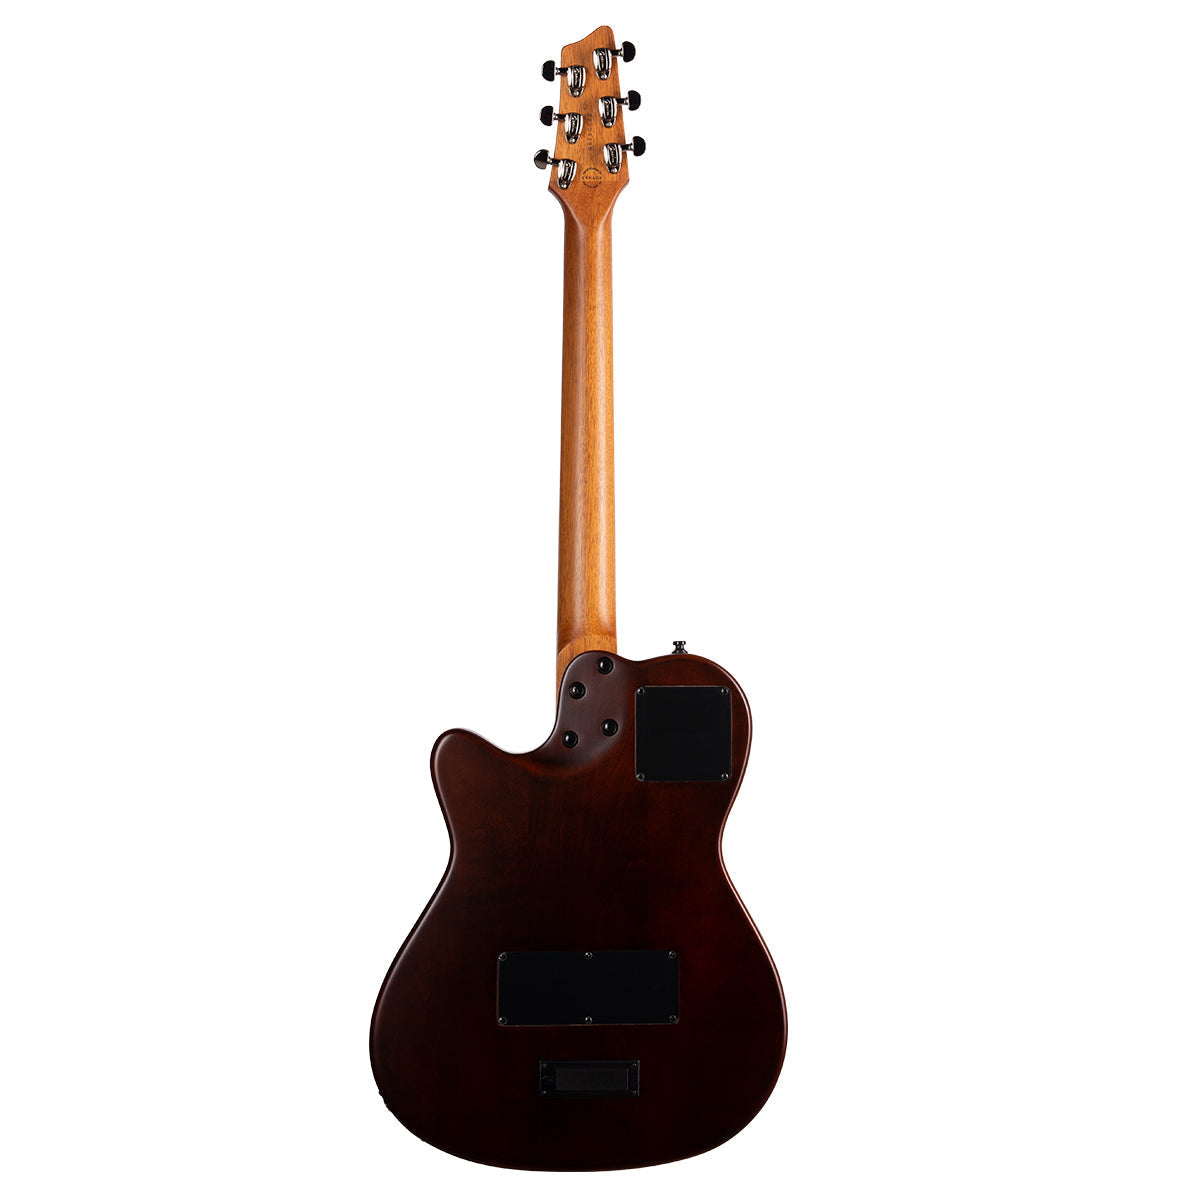 Godin A6 Ultra Electric Guitar ~ Natural SG, Electric Guitar for sale at Richards Guitars.